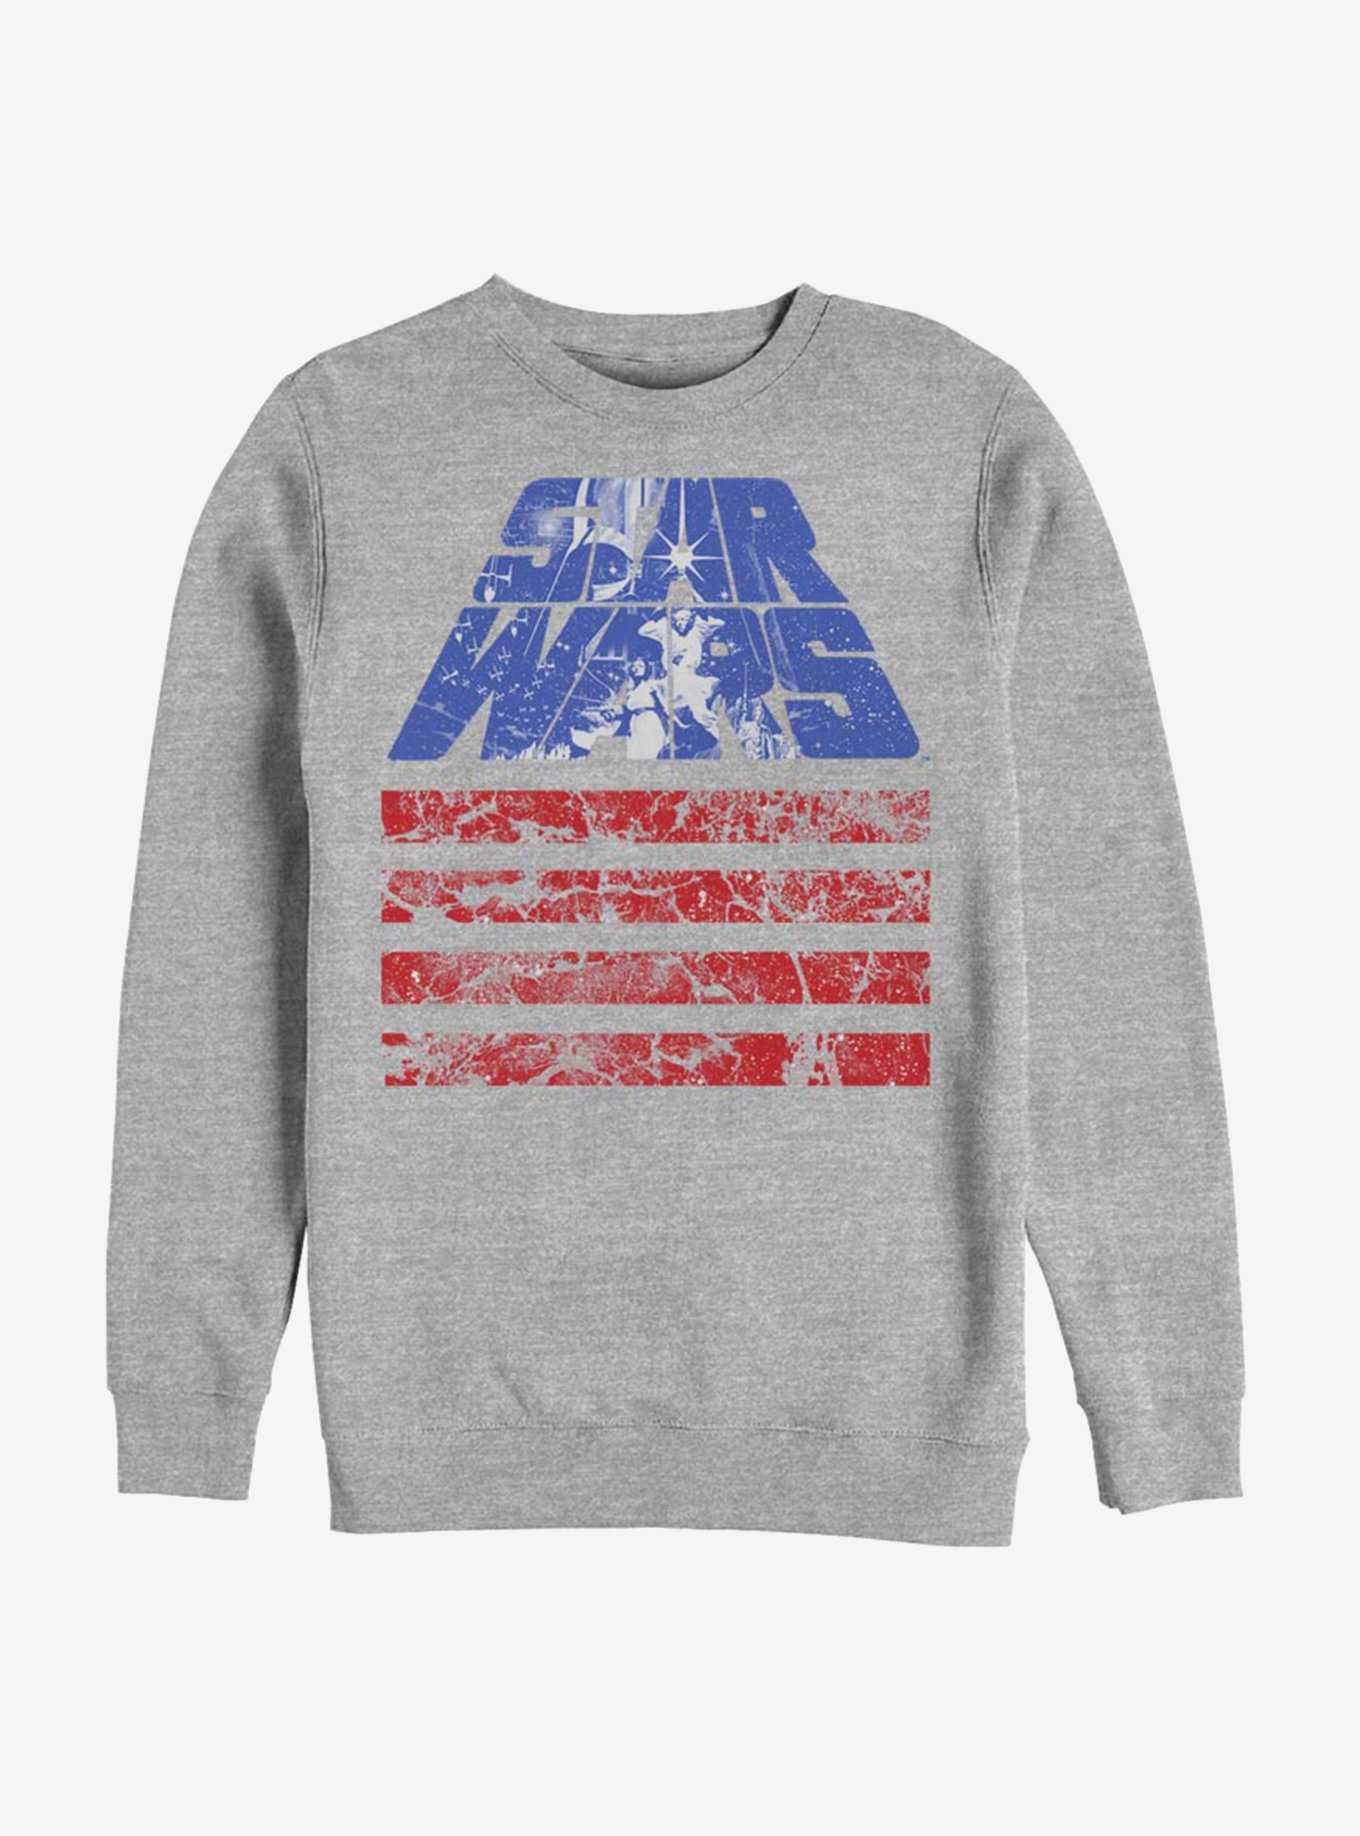 Star Wars Star Glory Sweatshirt, , hi-res